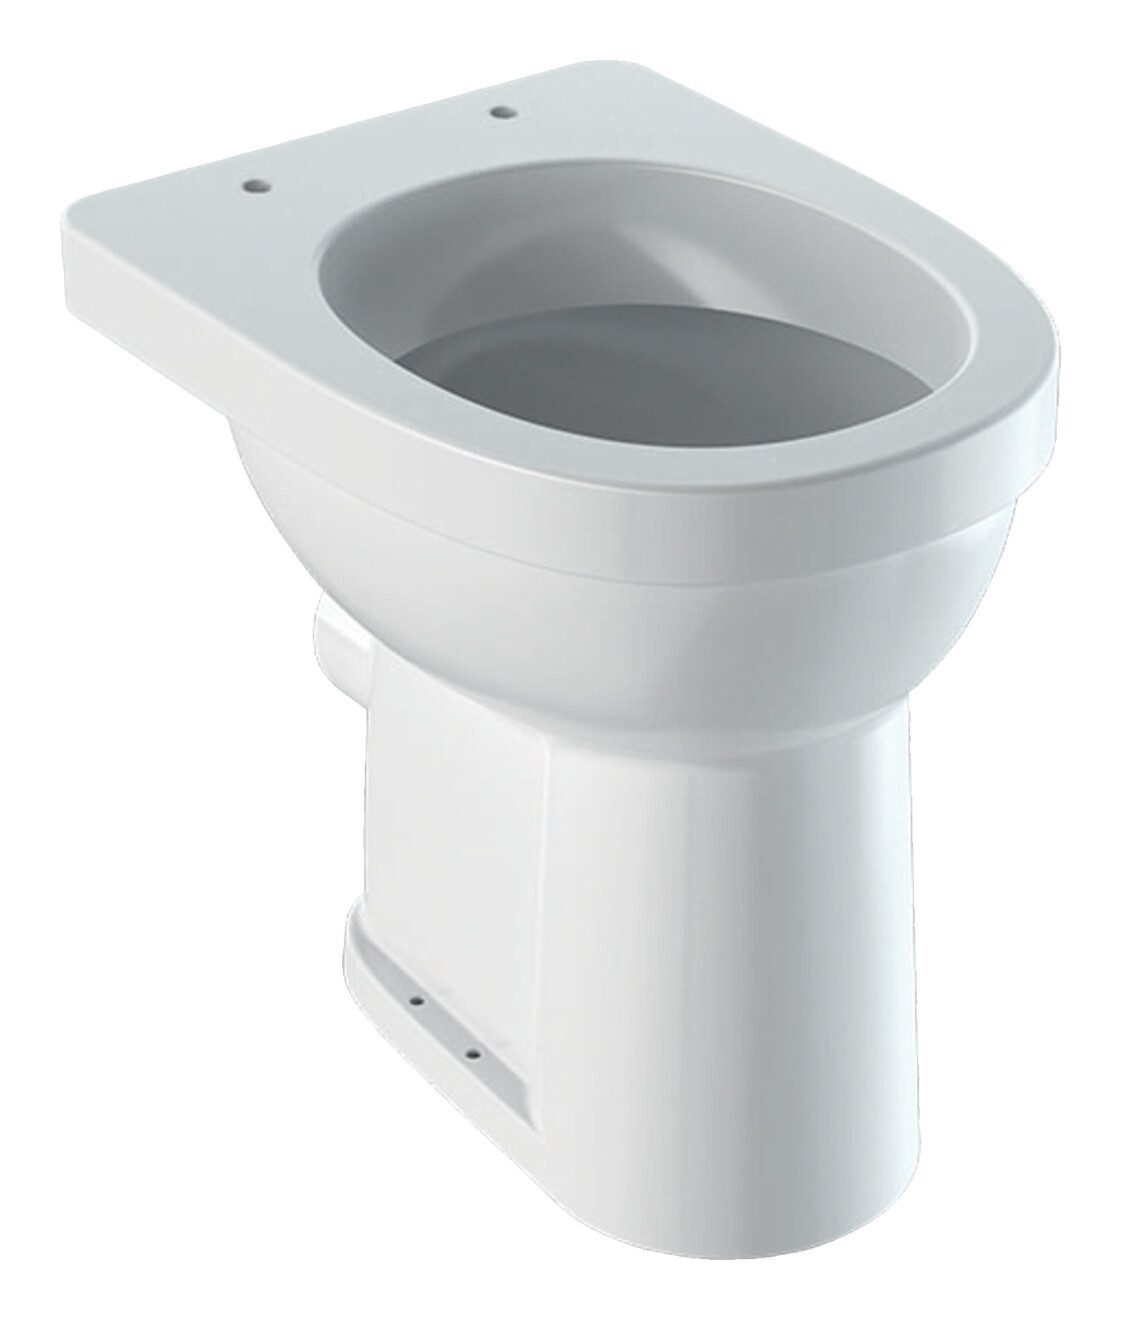 GEBERIT Flachspül-WC Renova Comfort, Stehend, Stand Abgang horizontal Höhe 450 mm - Weiß